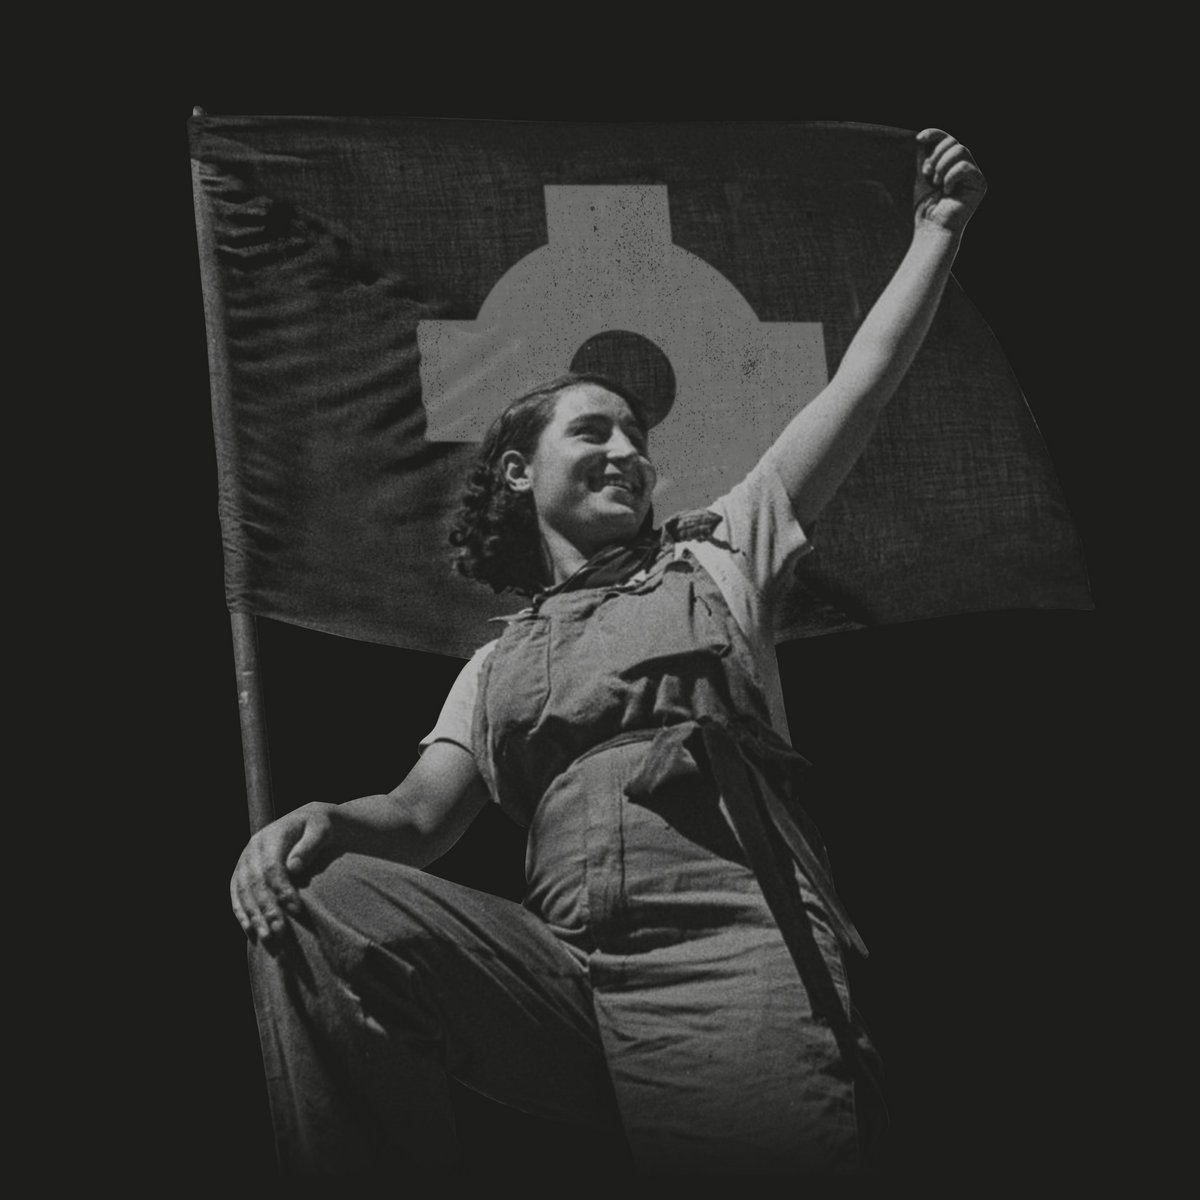 Militia, “The Black Flag Hoisted”